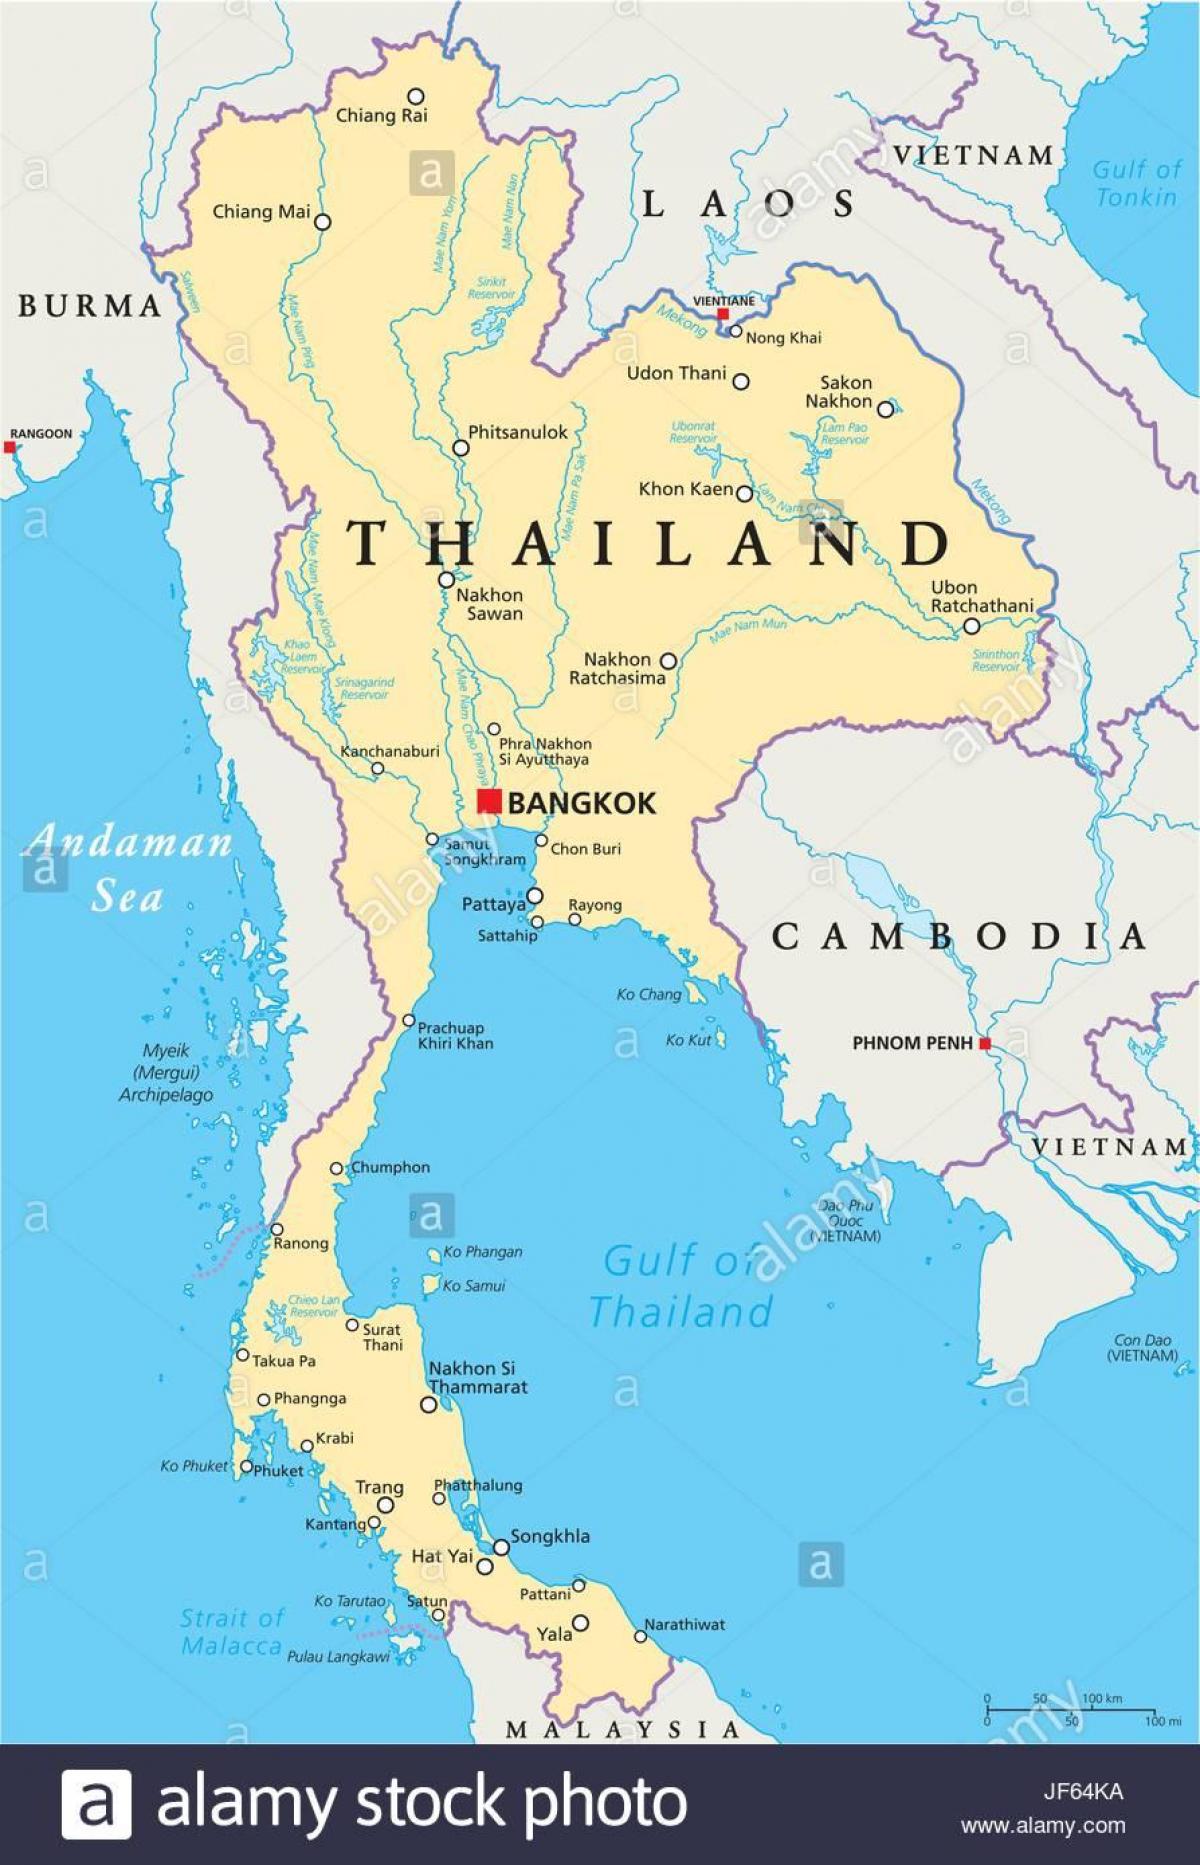 bangkok, tailàndia mapa del món